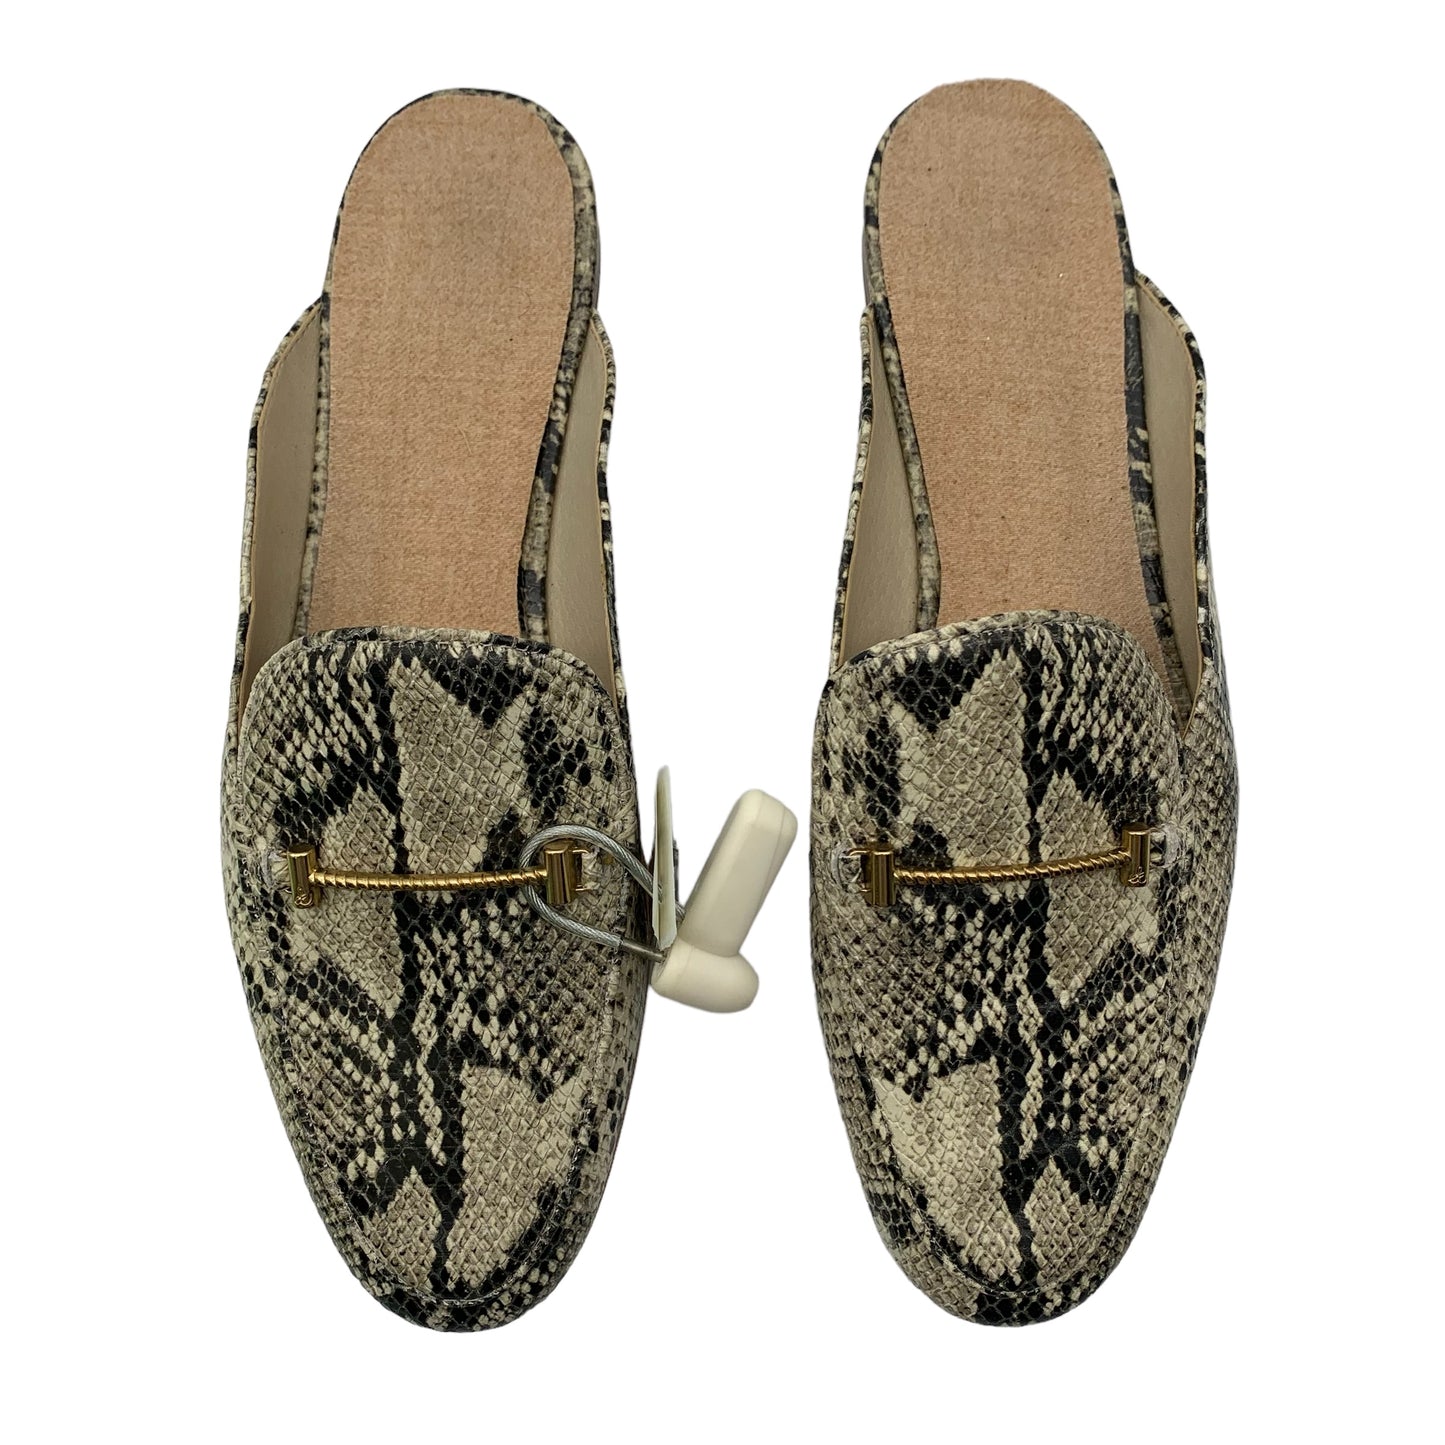 Shoes Flats Mule & Slide By Sam Edelman  Size: 9.5